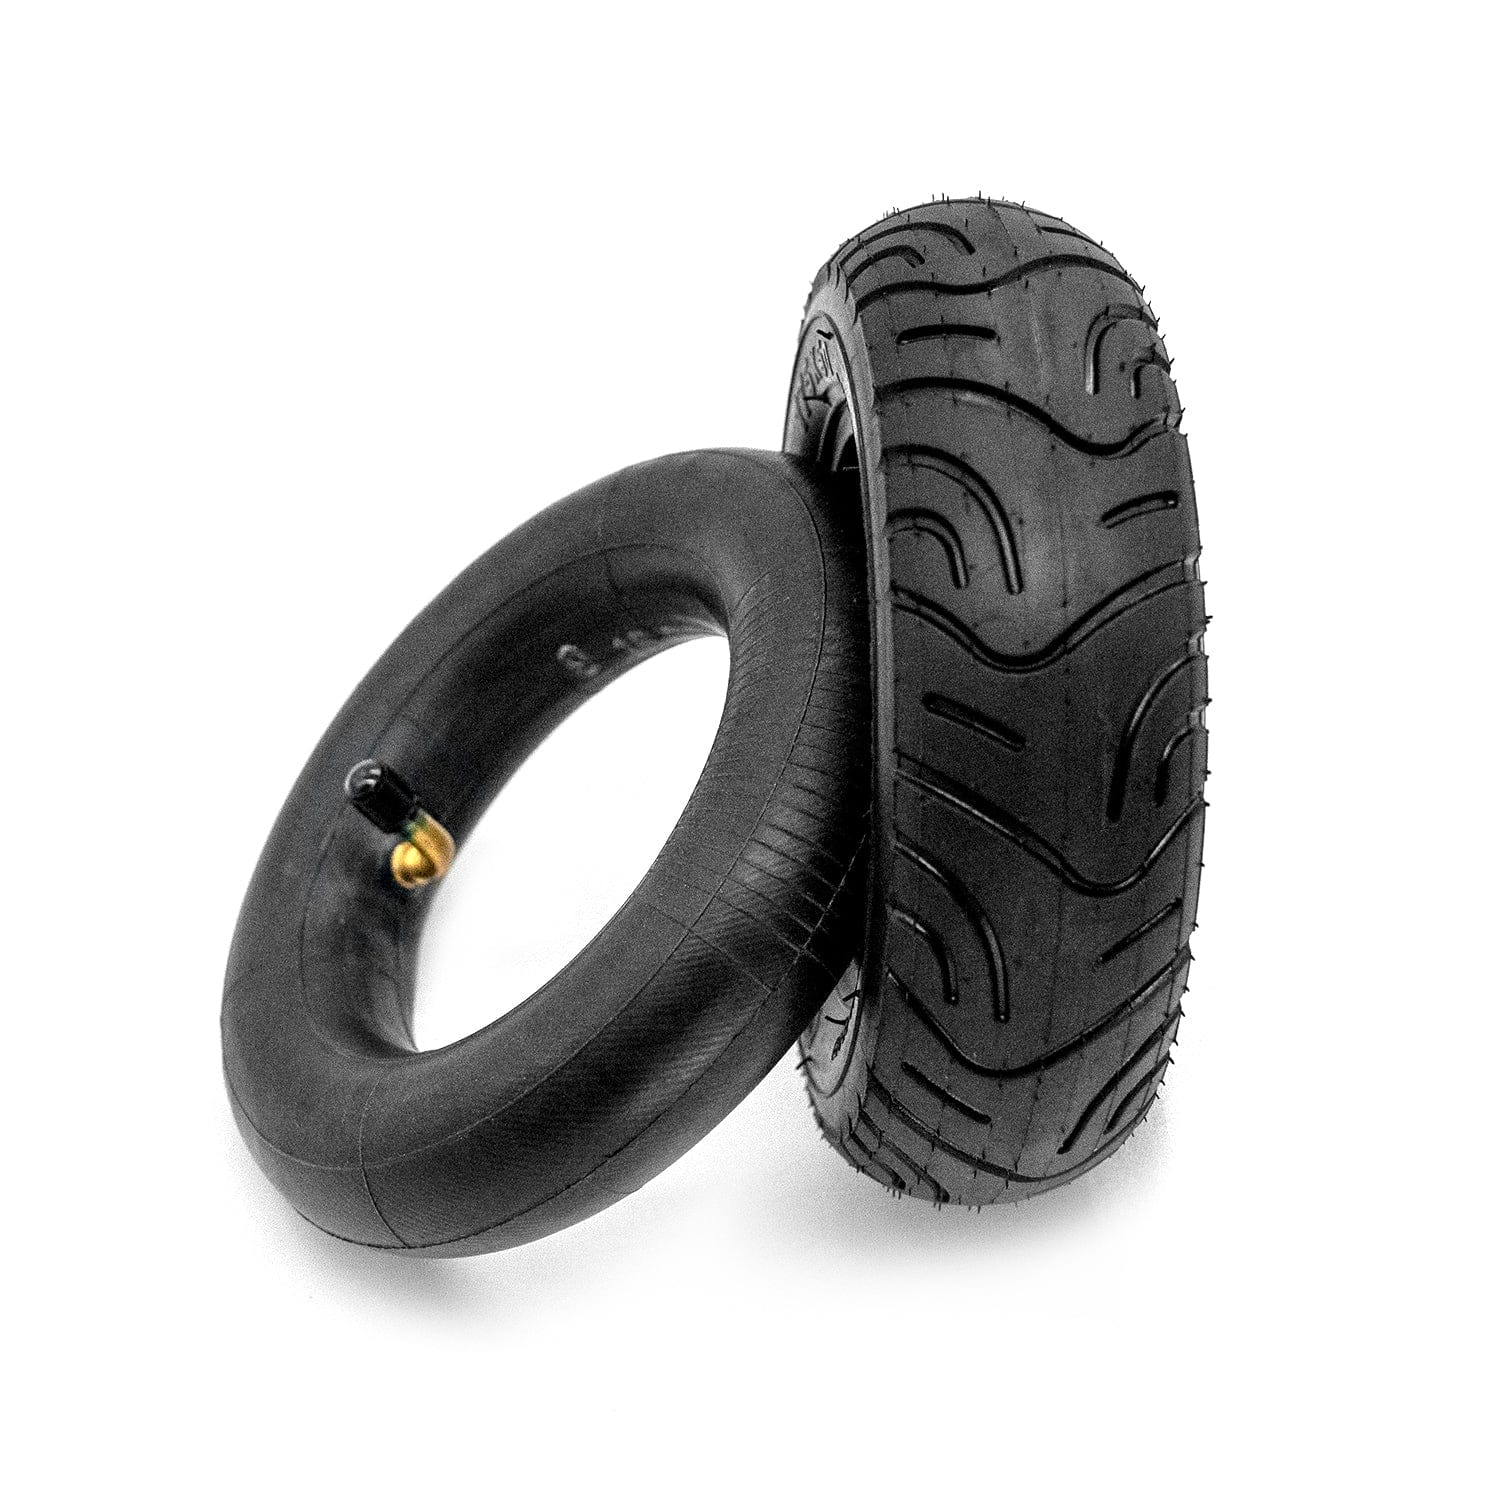 175mm All-Terrain Tire Set